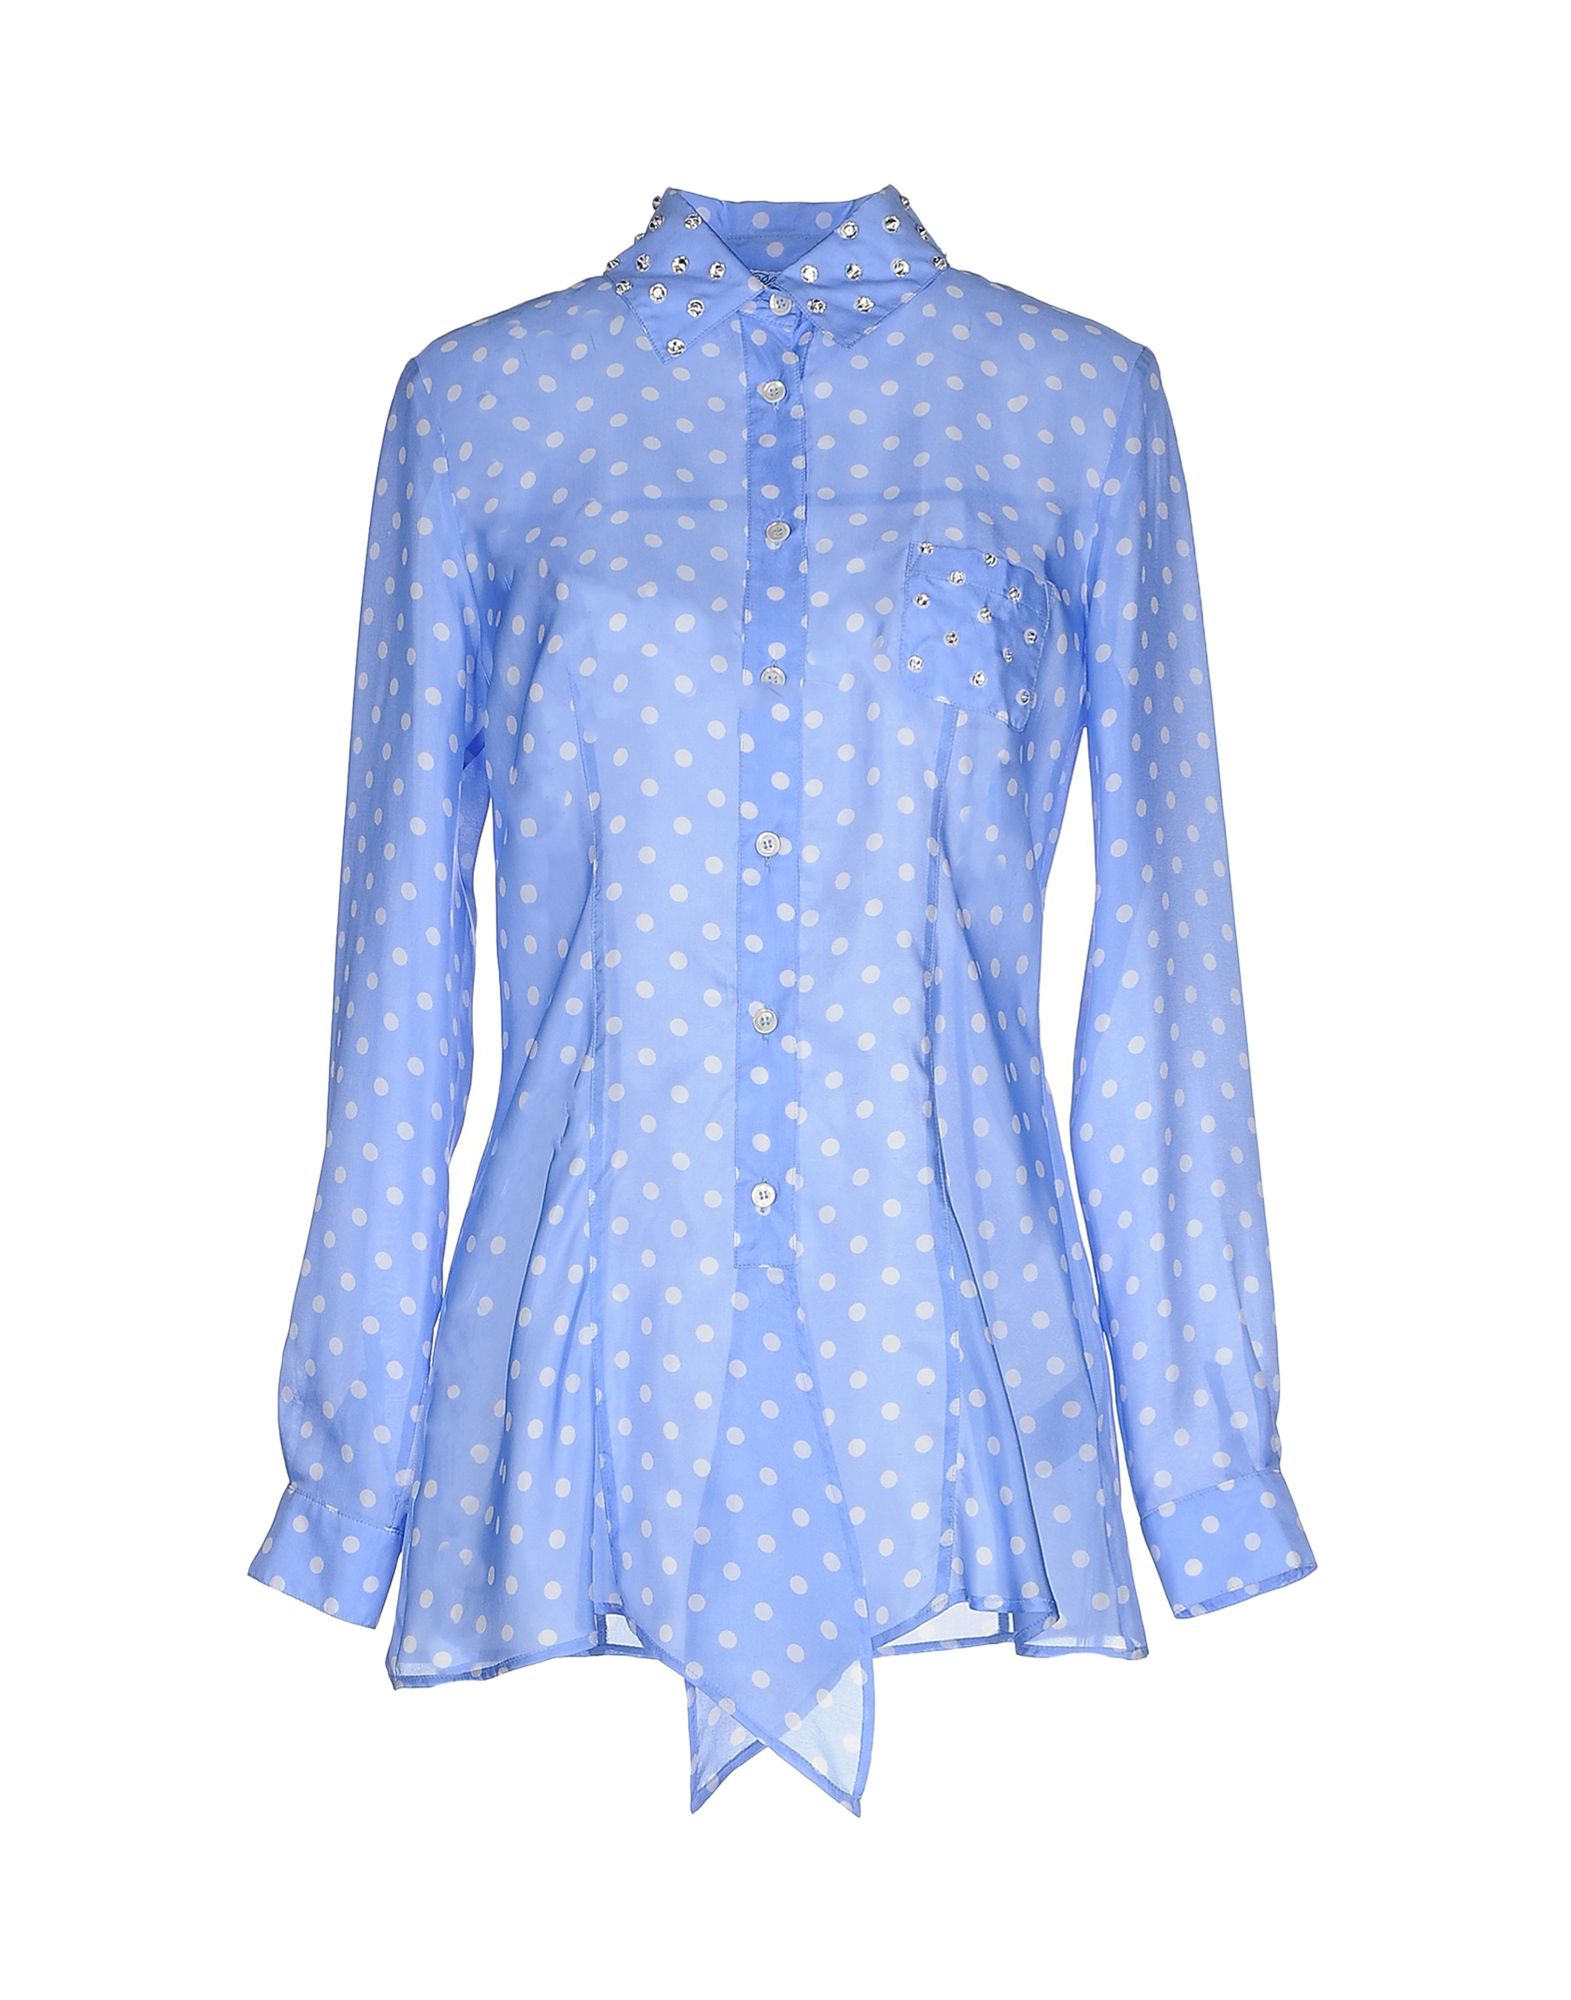 BLUMARINE Patterned shirts & blouses,38523665WE 6